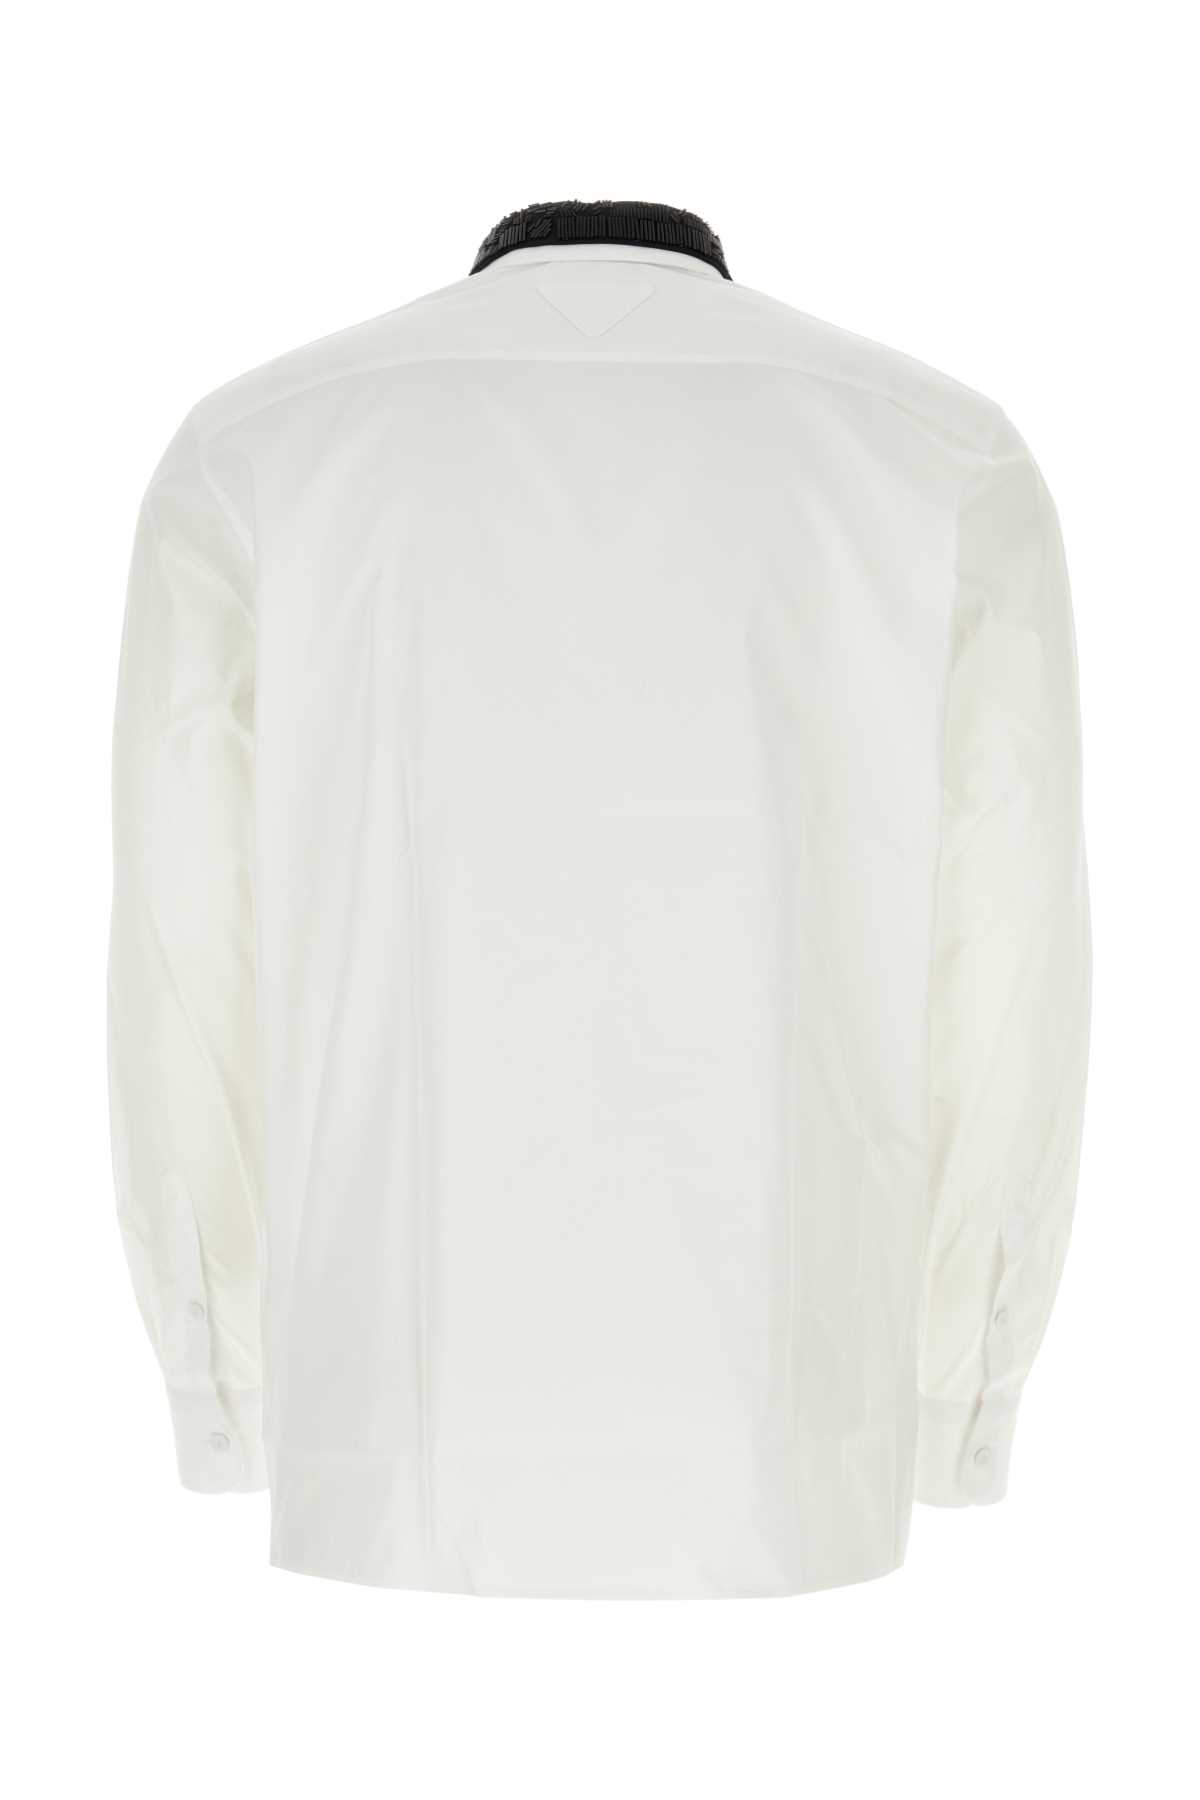 Prada White Poplin Shirt In Bianconero